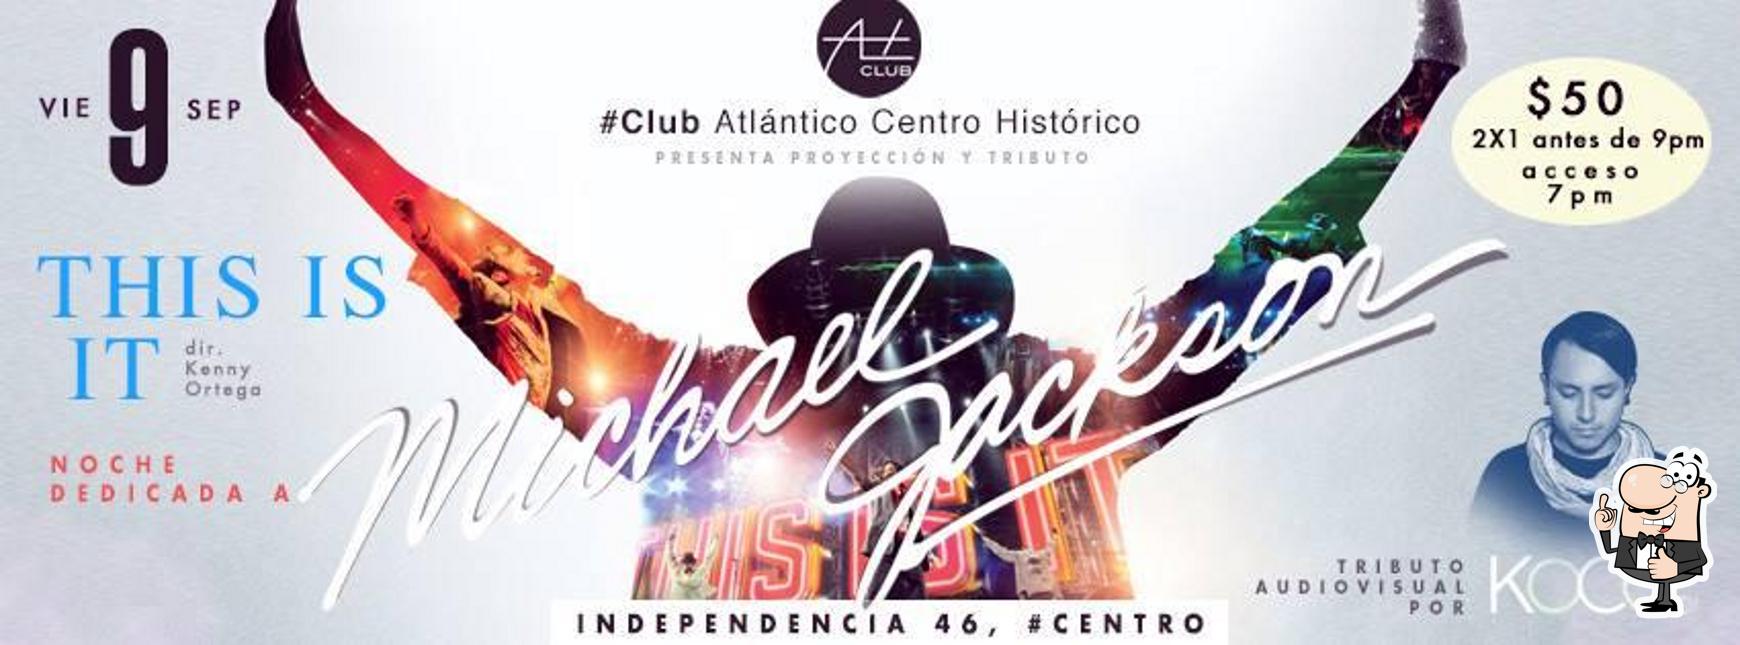 Club Atlántico, Mexico City, Av Independencia 46 - Restaurant reviews